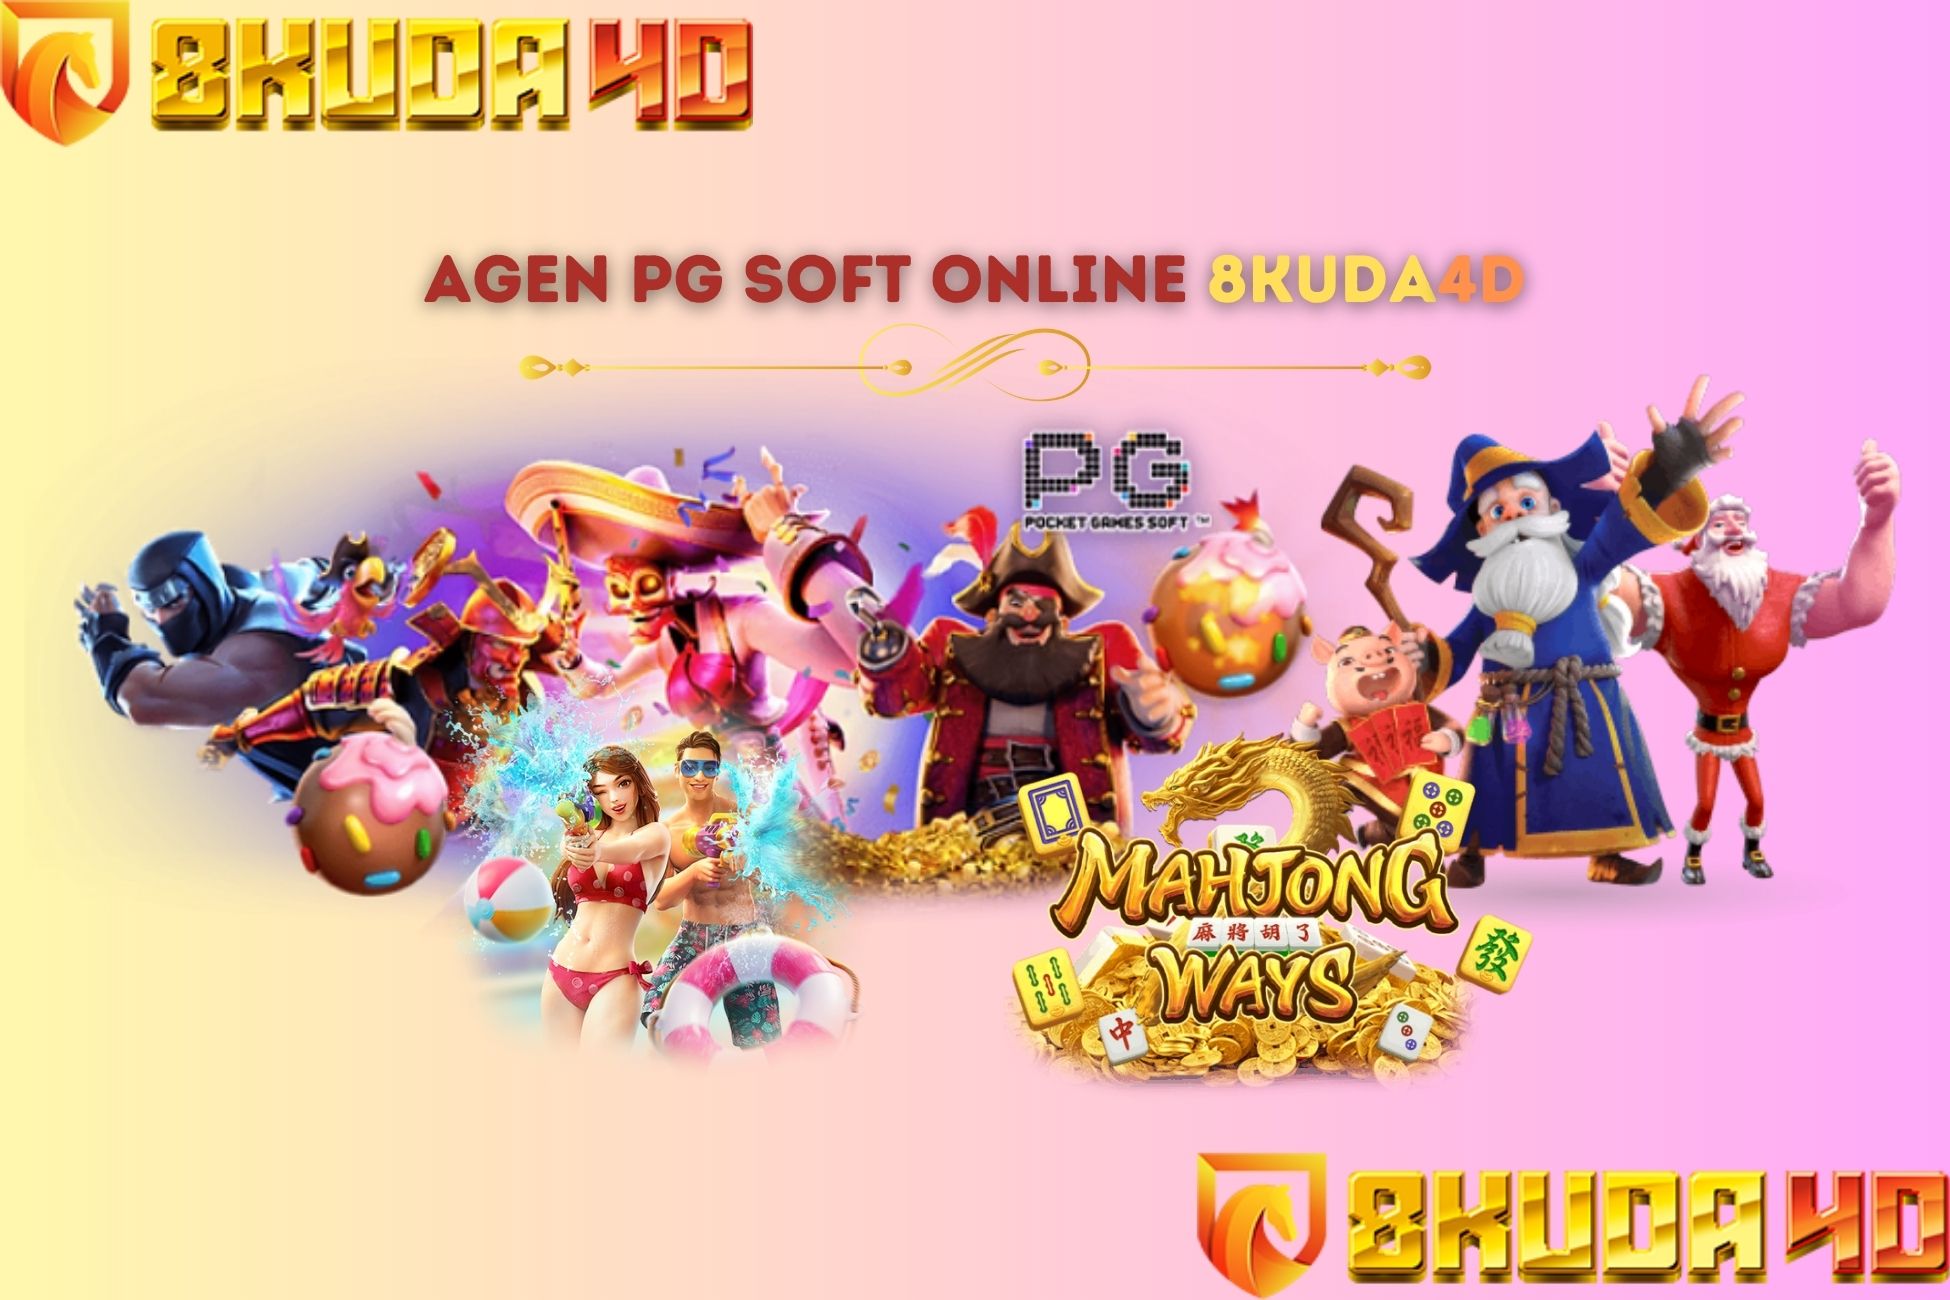 Agen PG Soft Online 8Kuda4D